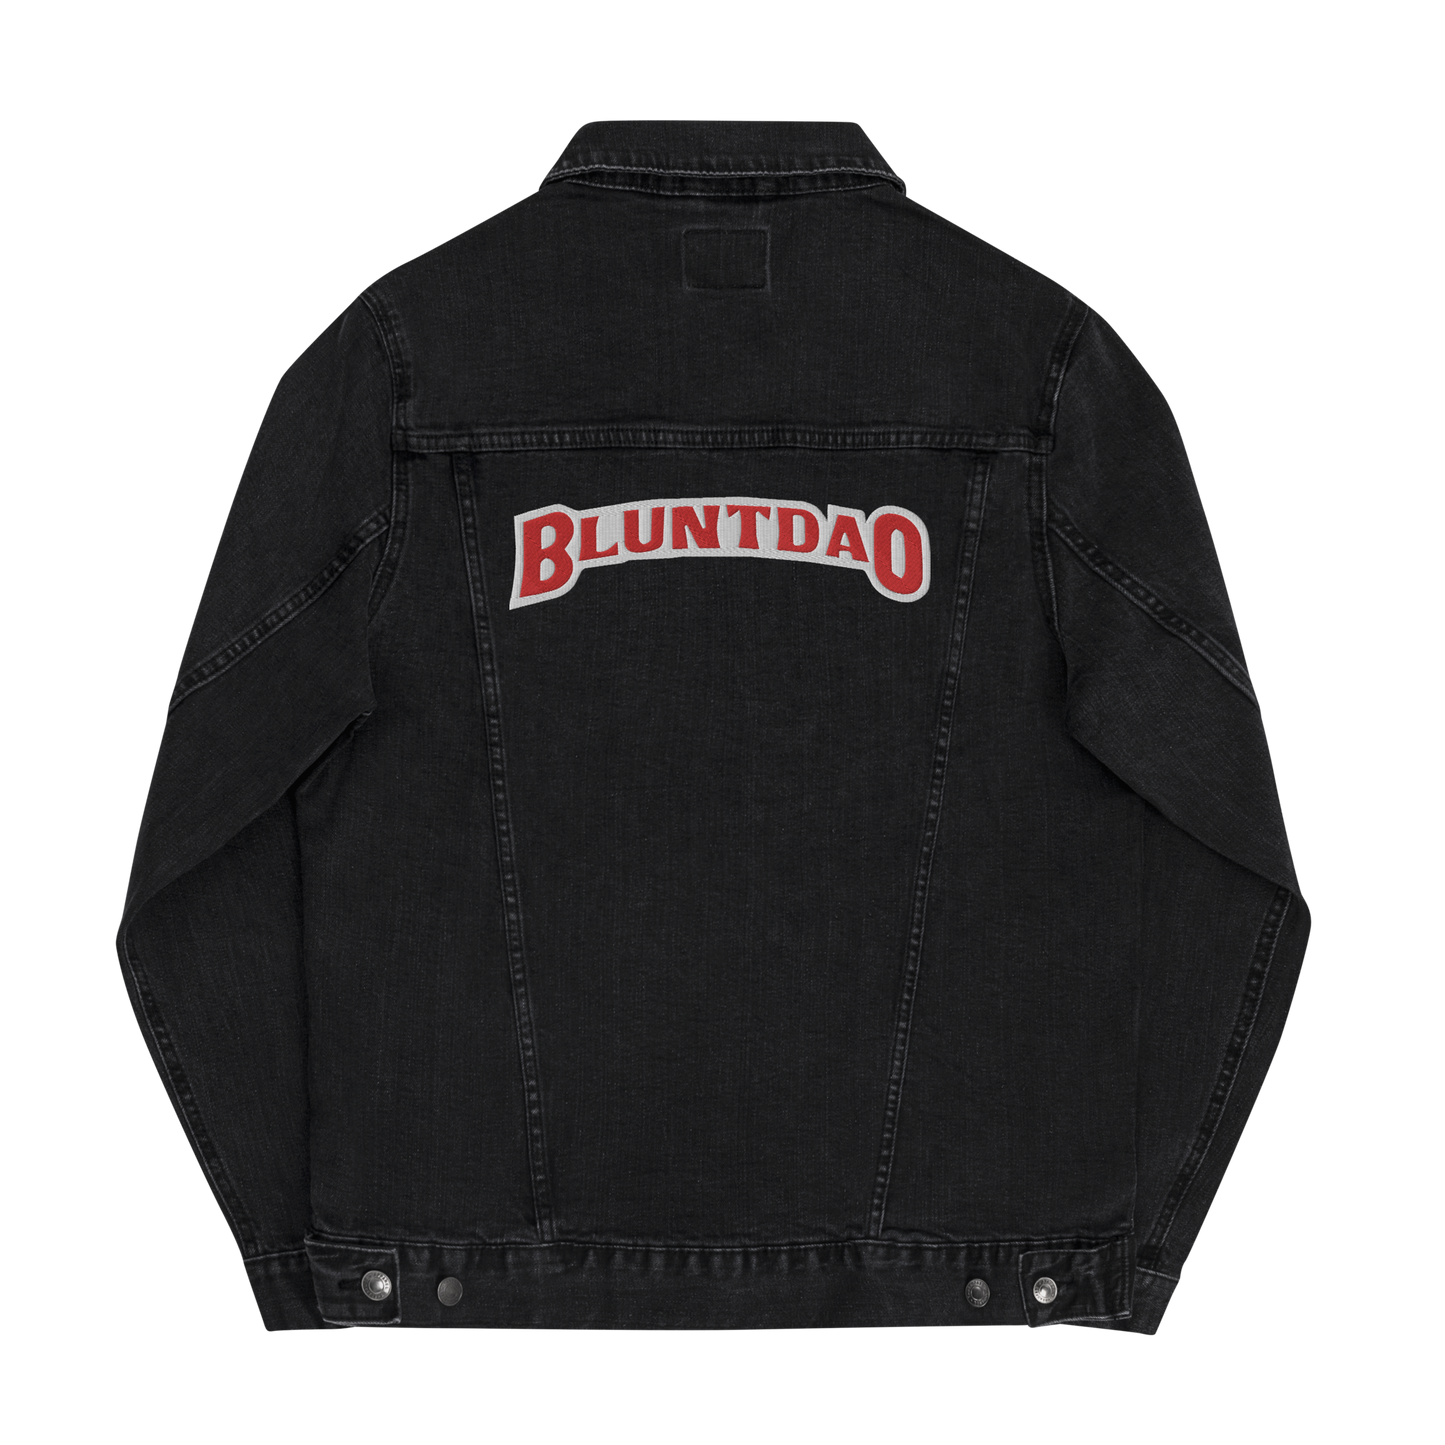 BluntDAO Embroidery Unisex Denim Jacket